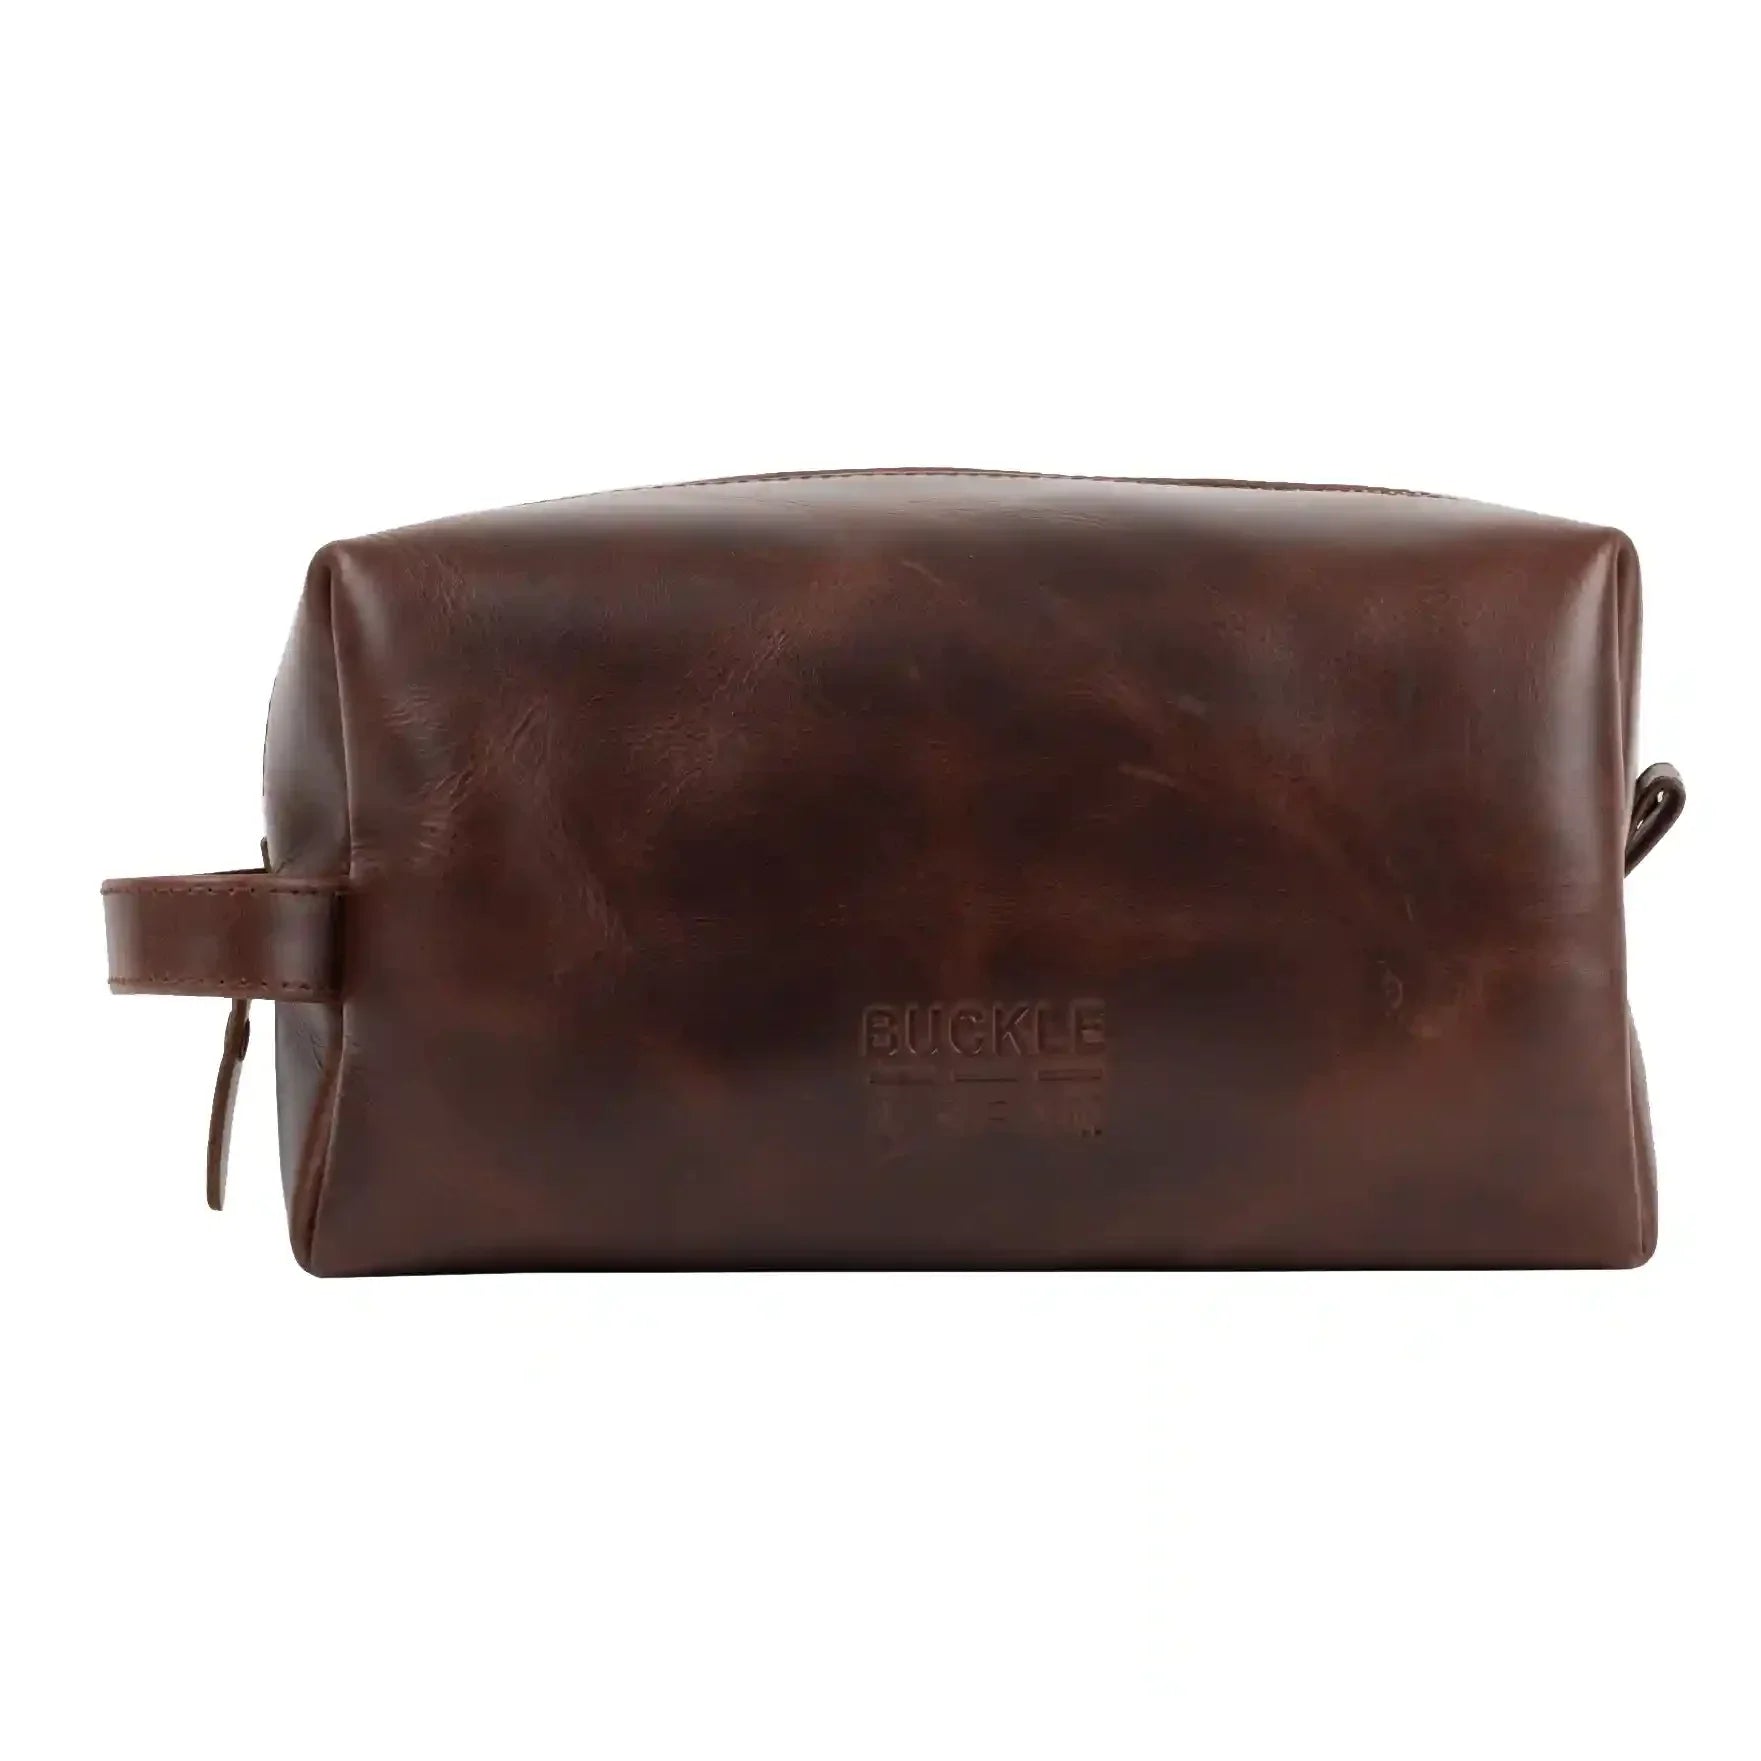 Buckle & Seam wash bag Everest 22 cm - Brown